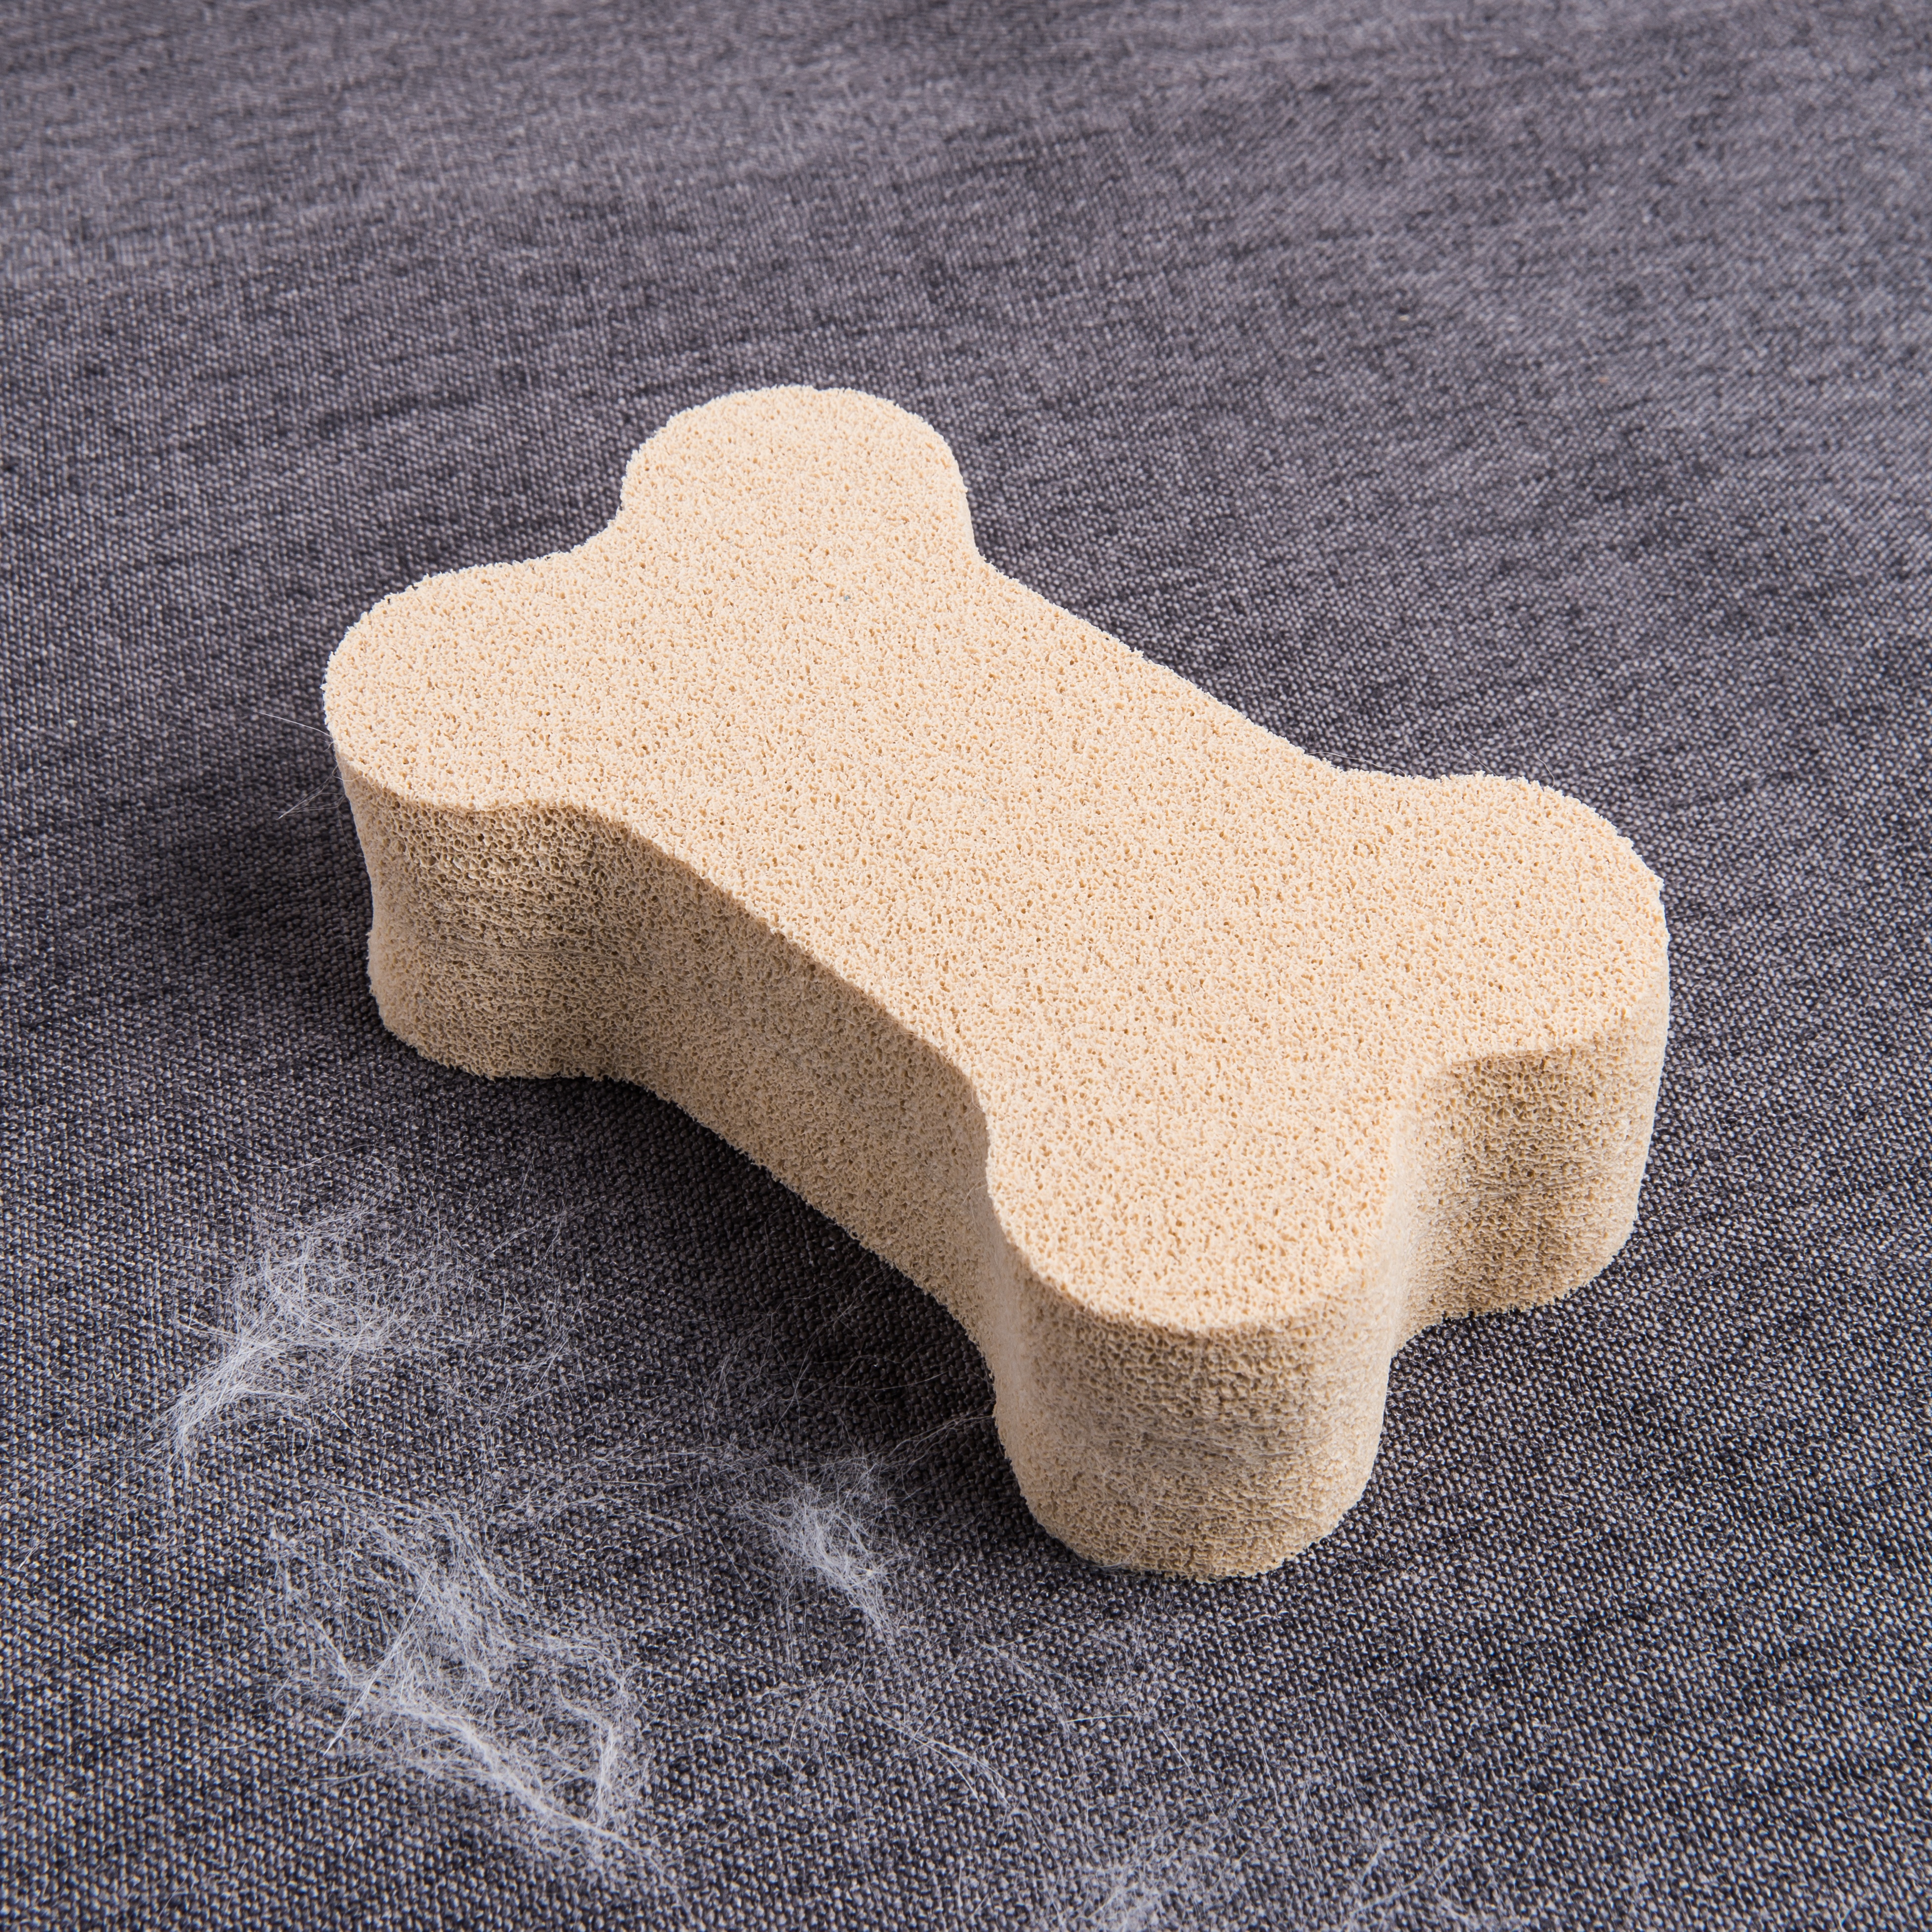 bone shaped pet hair remover sponge